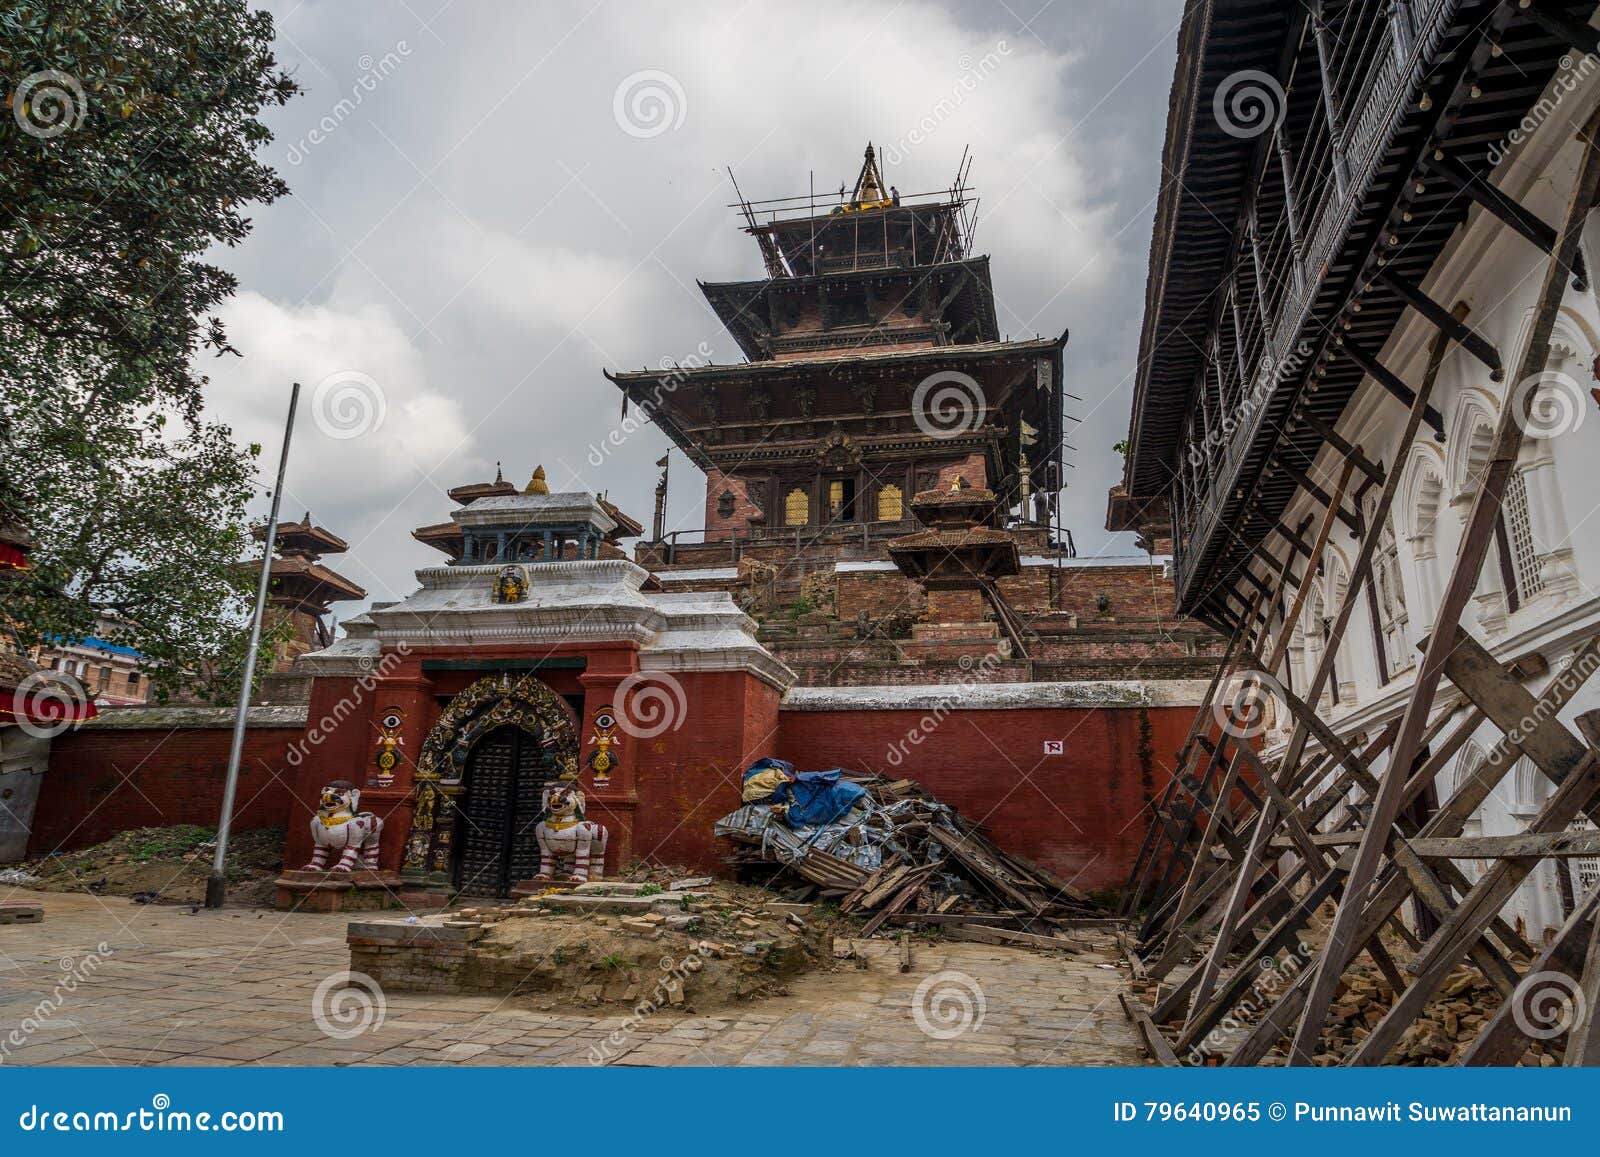 Kathmandu Dubar Square Reconstruction After Earthquake ...